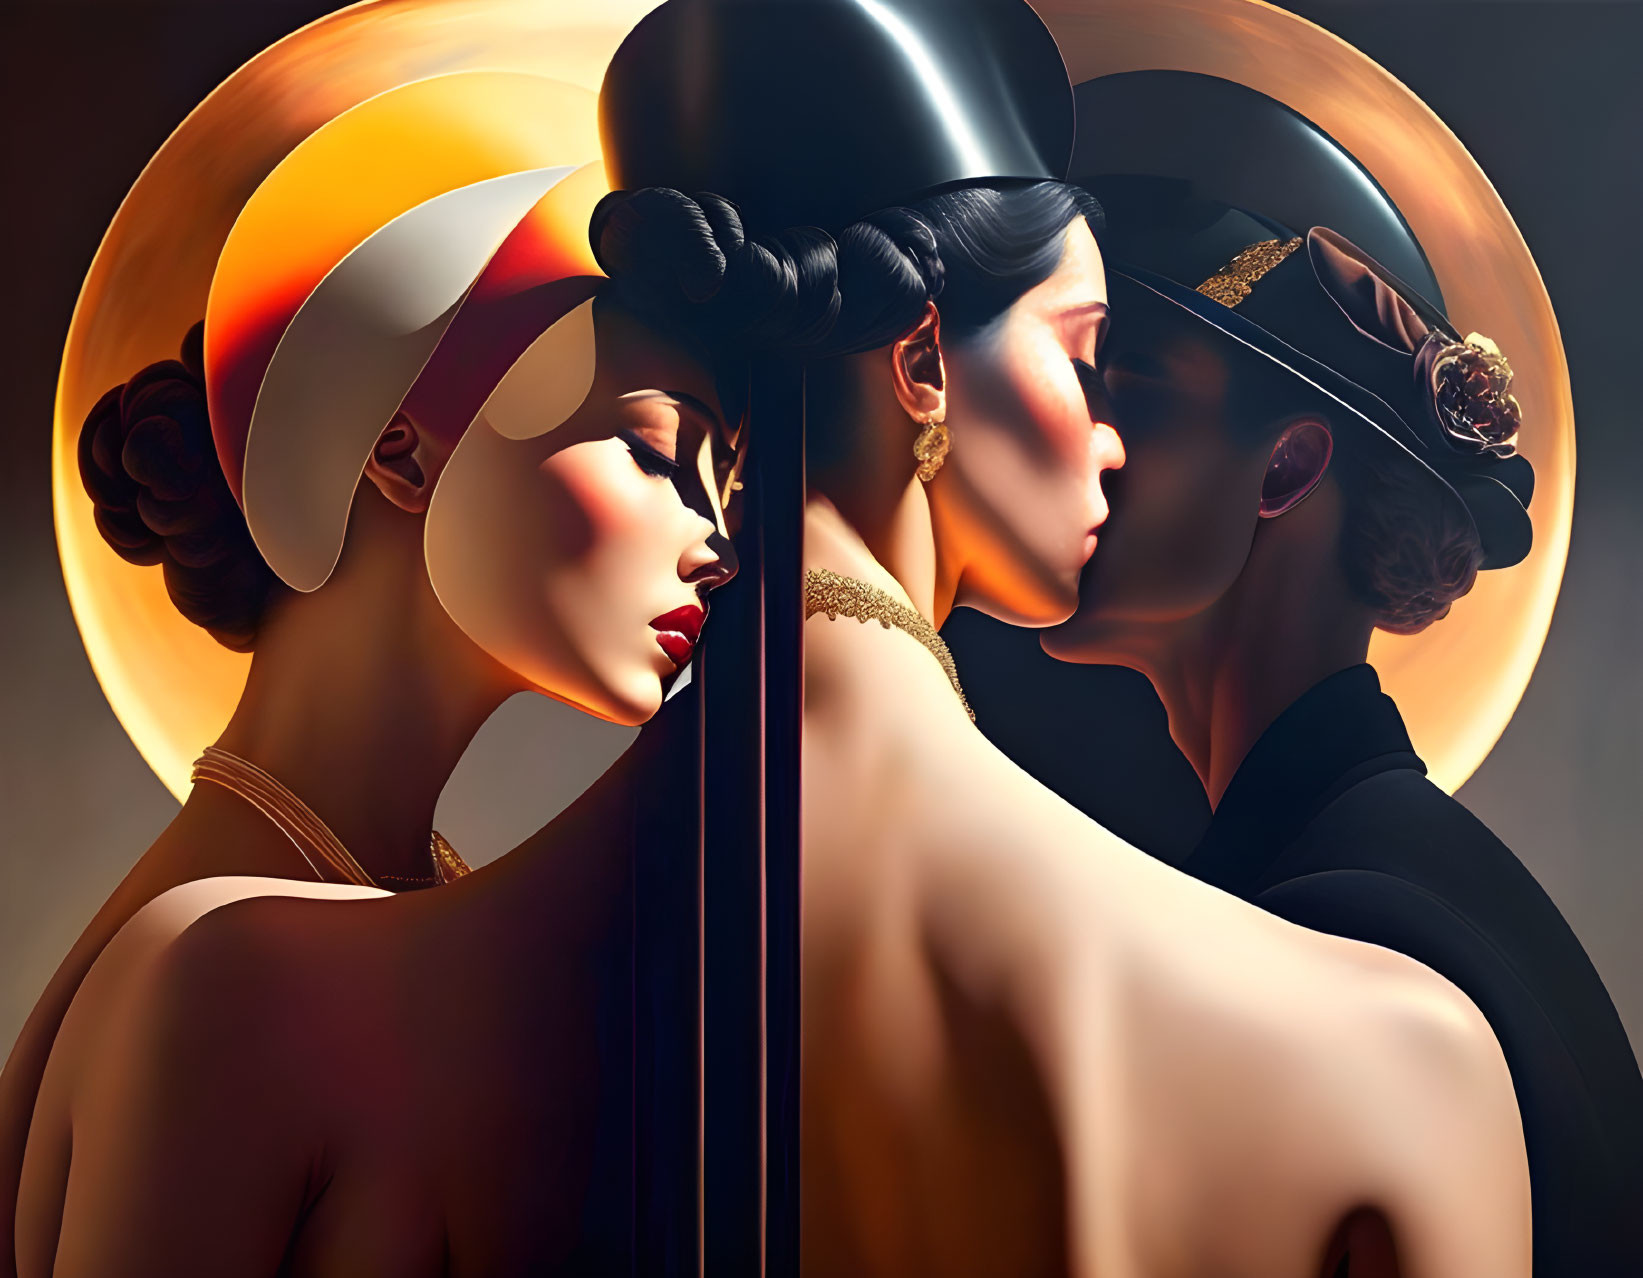 Stylized illustration of elegant couples in profile against golden halo background